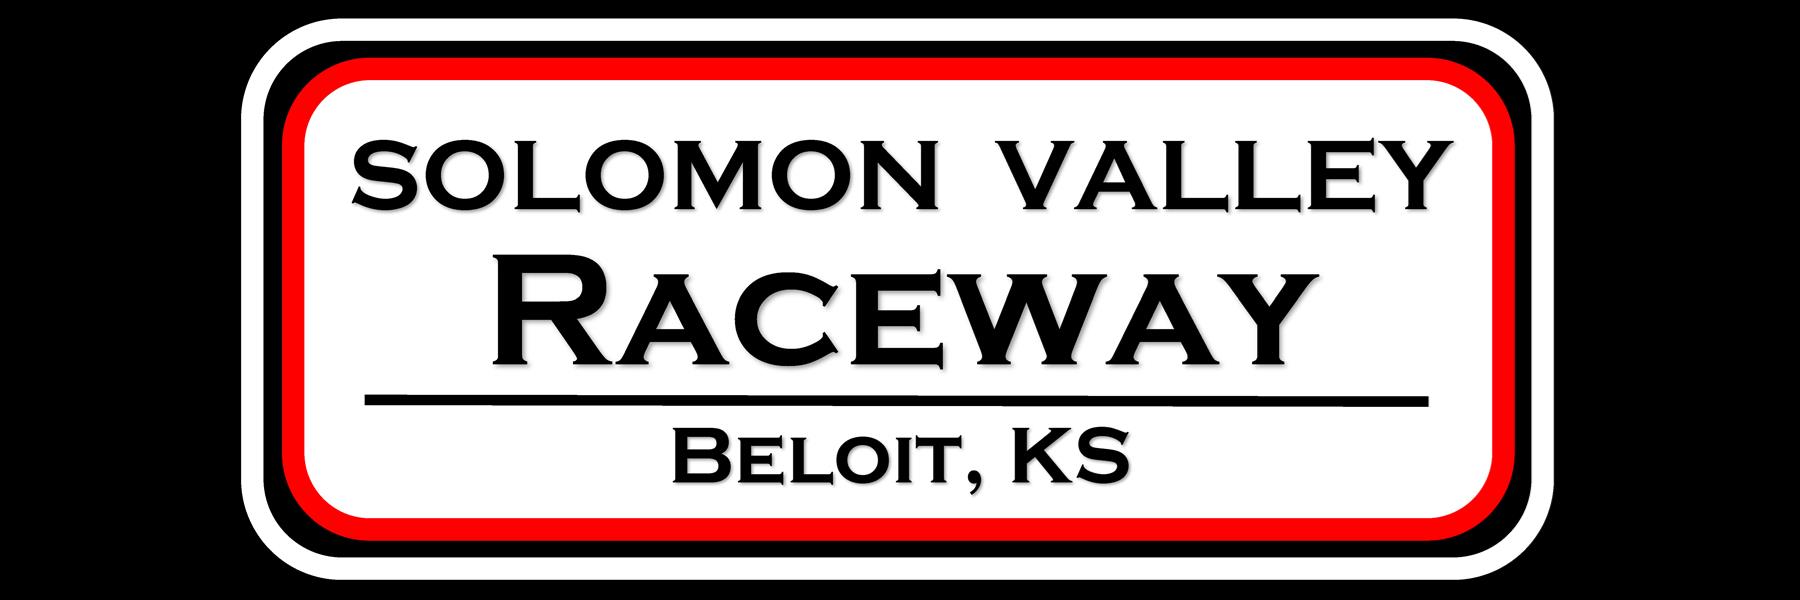 7/27/2012 - Mitchell County Fairgrounds Raceway